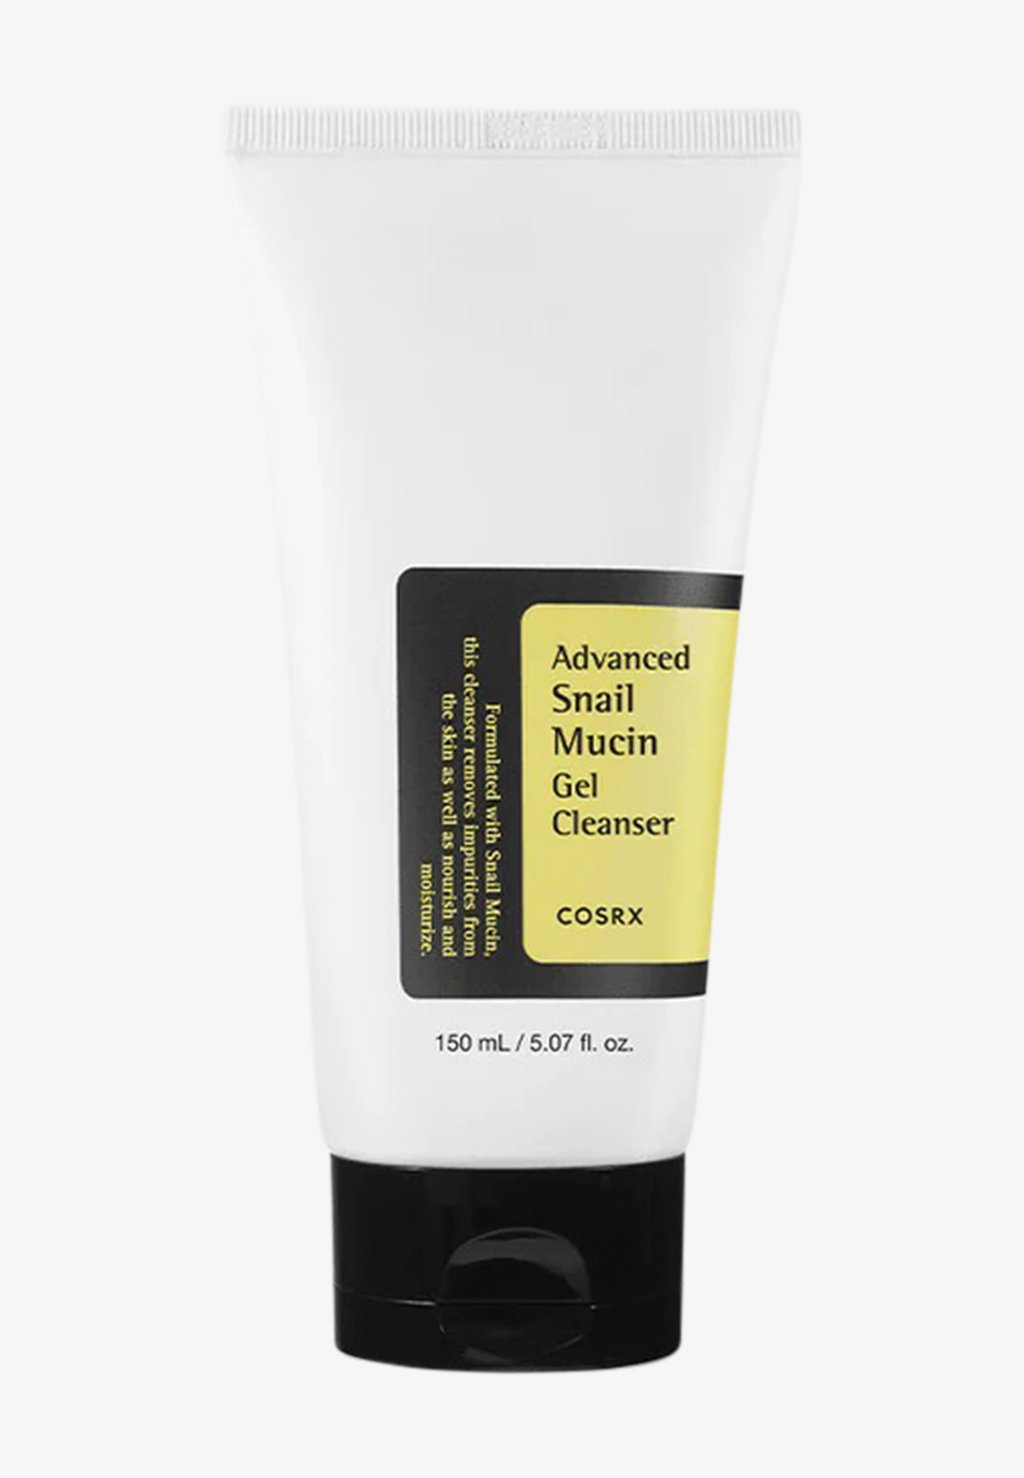 Очищающее средство Advanced Snail Mucin Power Gel Cleanser COSRX cosrx advanced snail mucin gel cleasner 150 ml